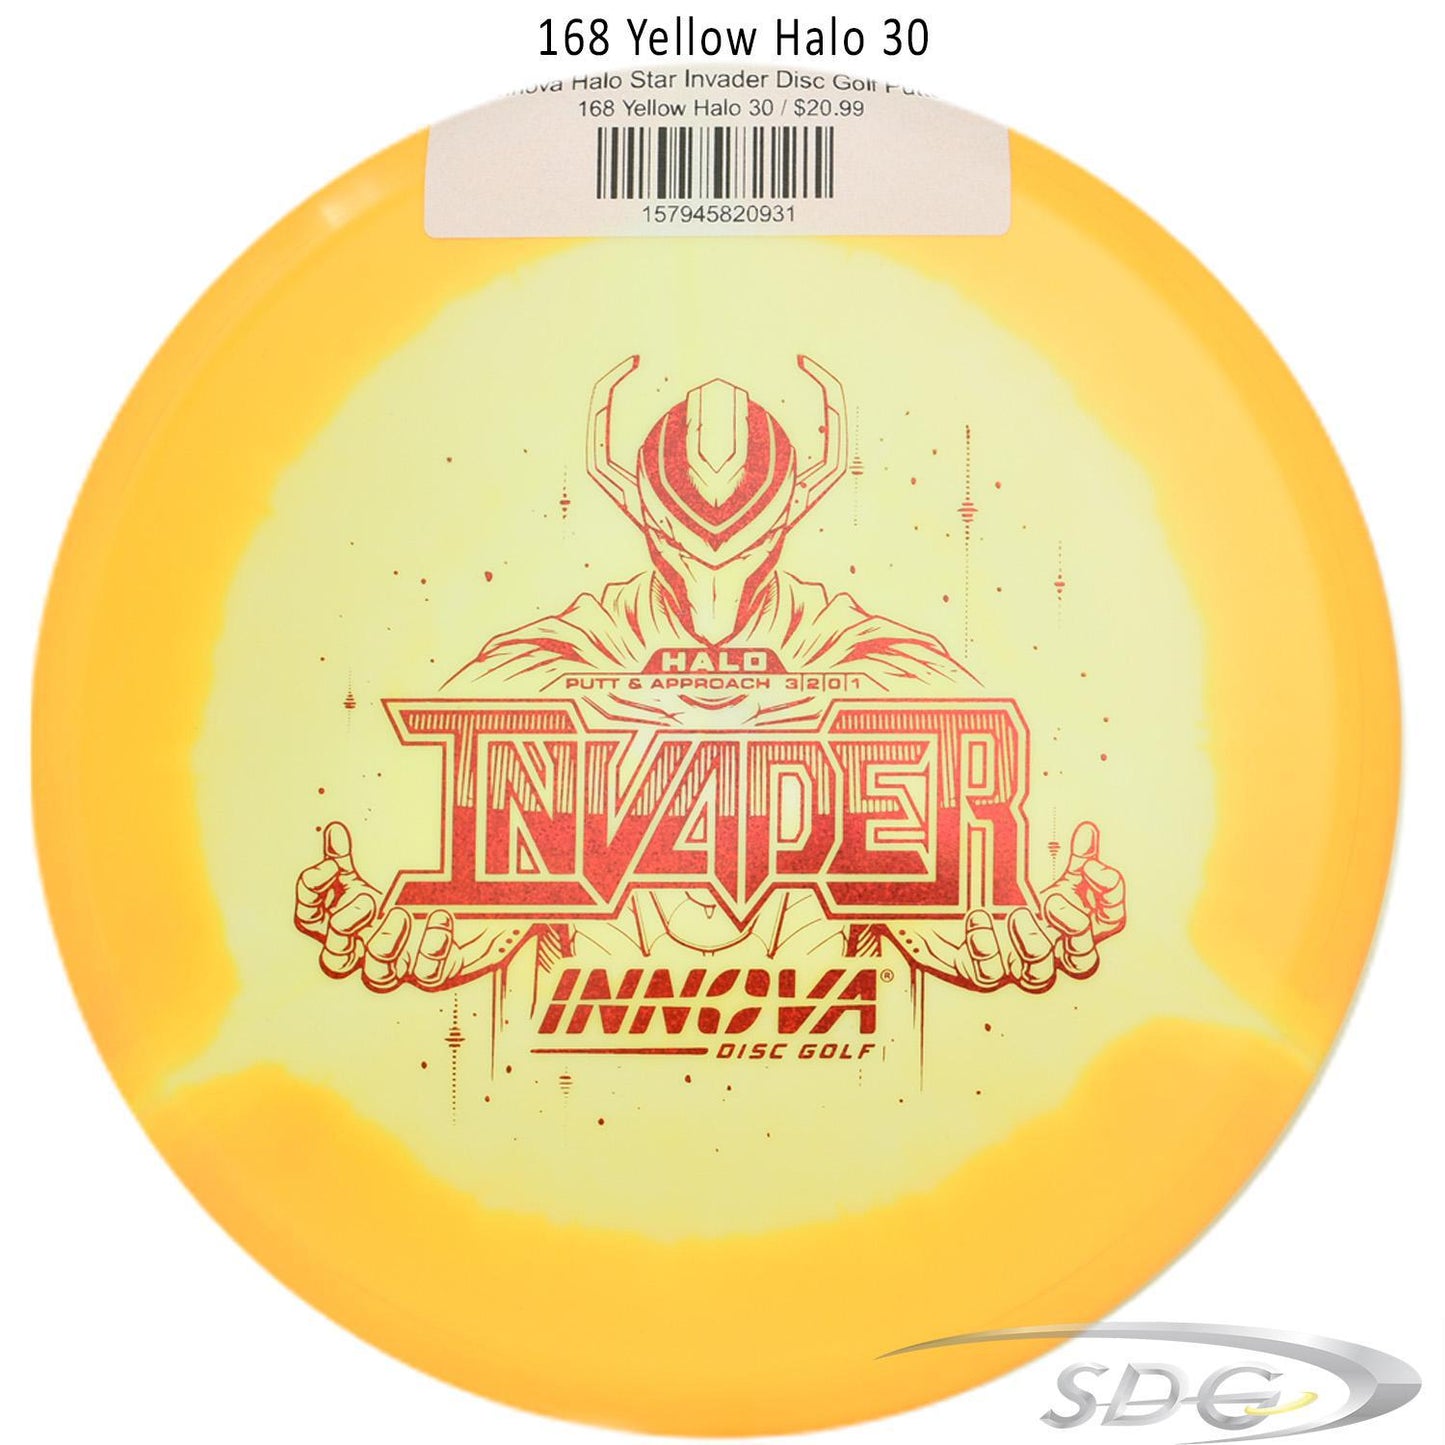 innova-halo-star-invader-disc-golf-putter 168 Yellow Halo 30 